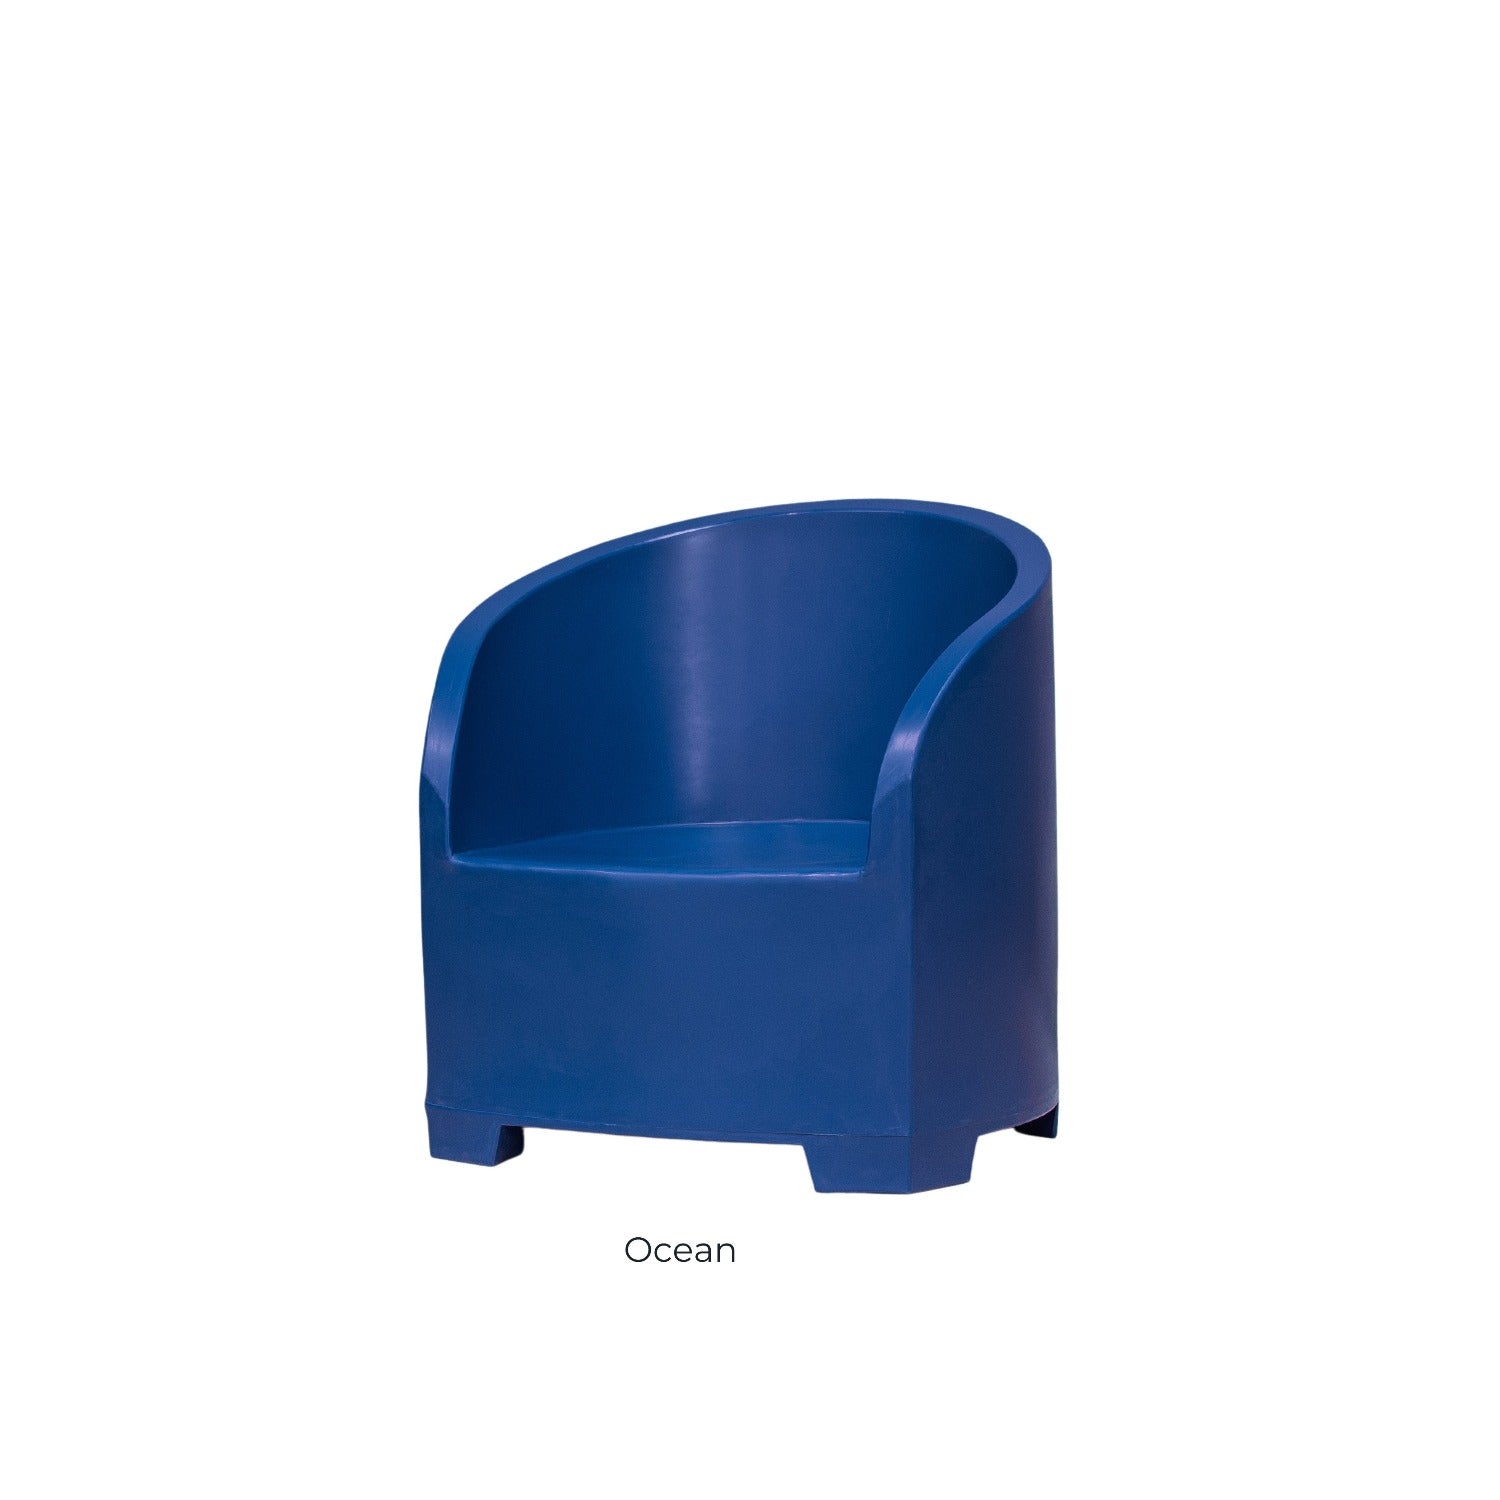 Dark blue outdoor chair by Modscene NZ